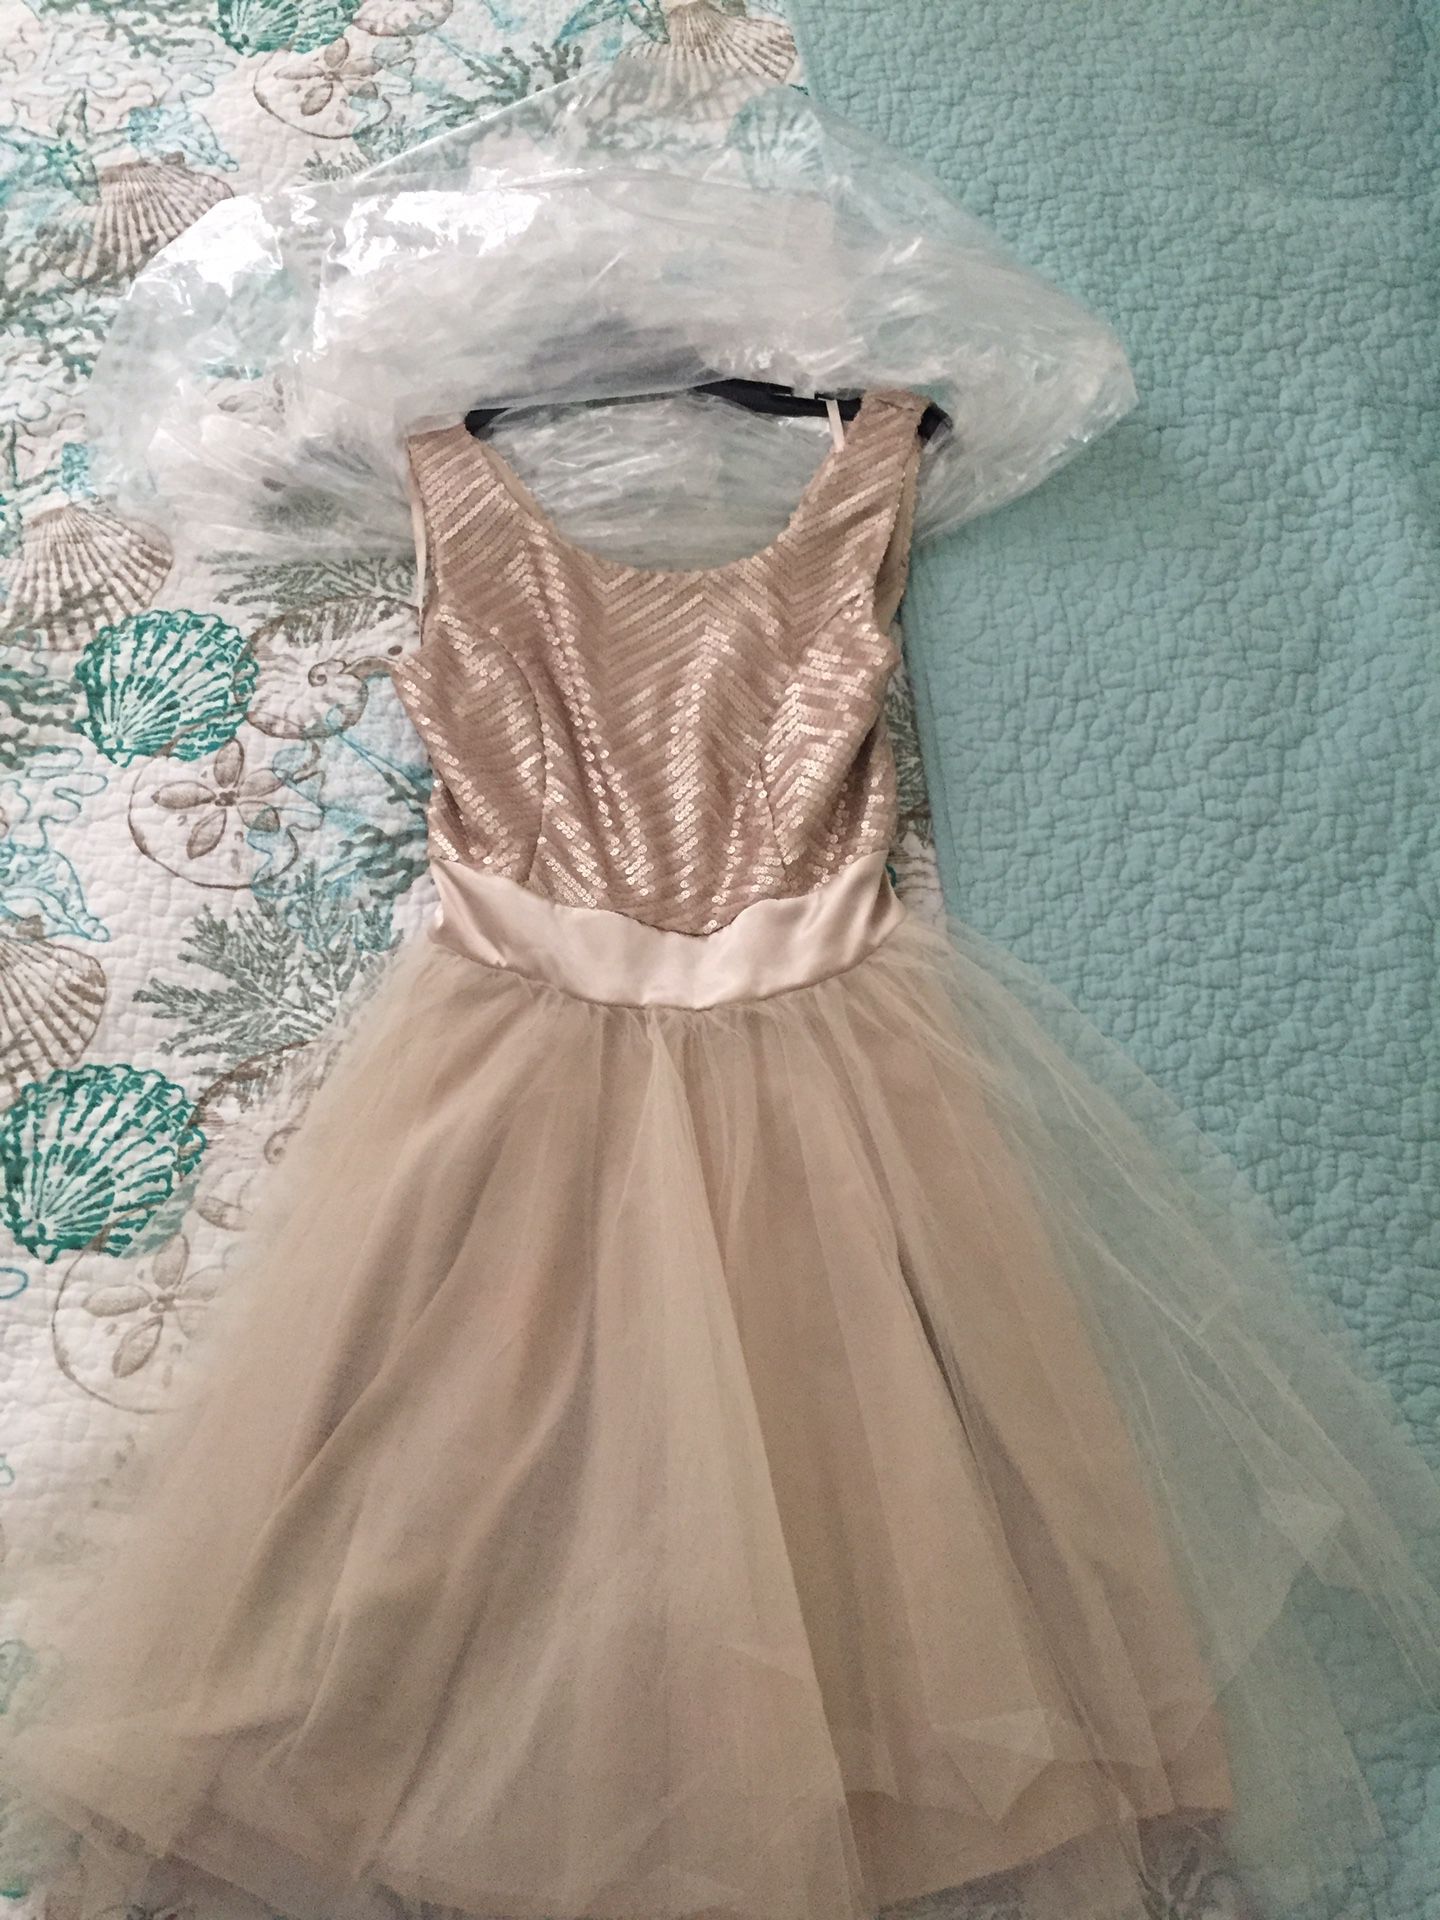 Size 9 dress